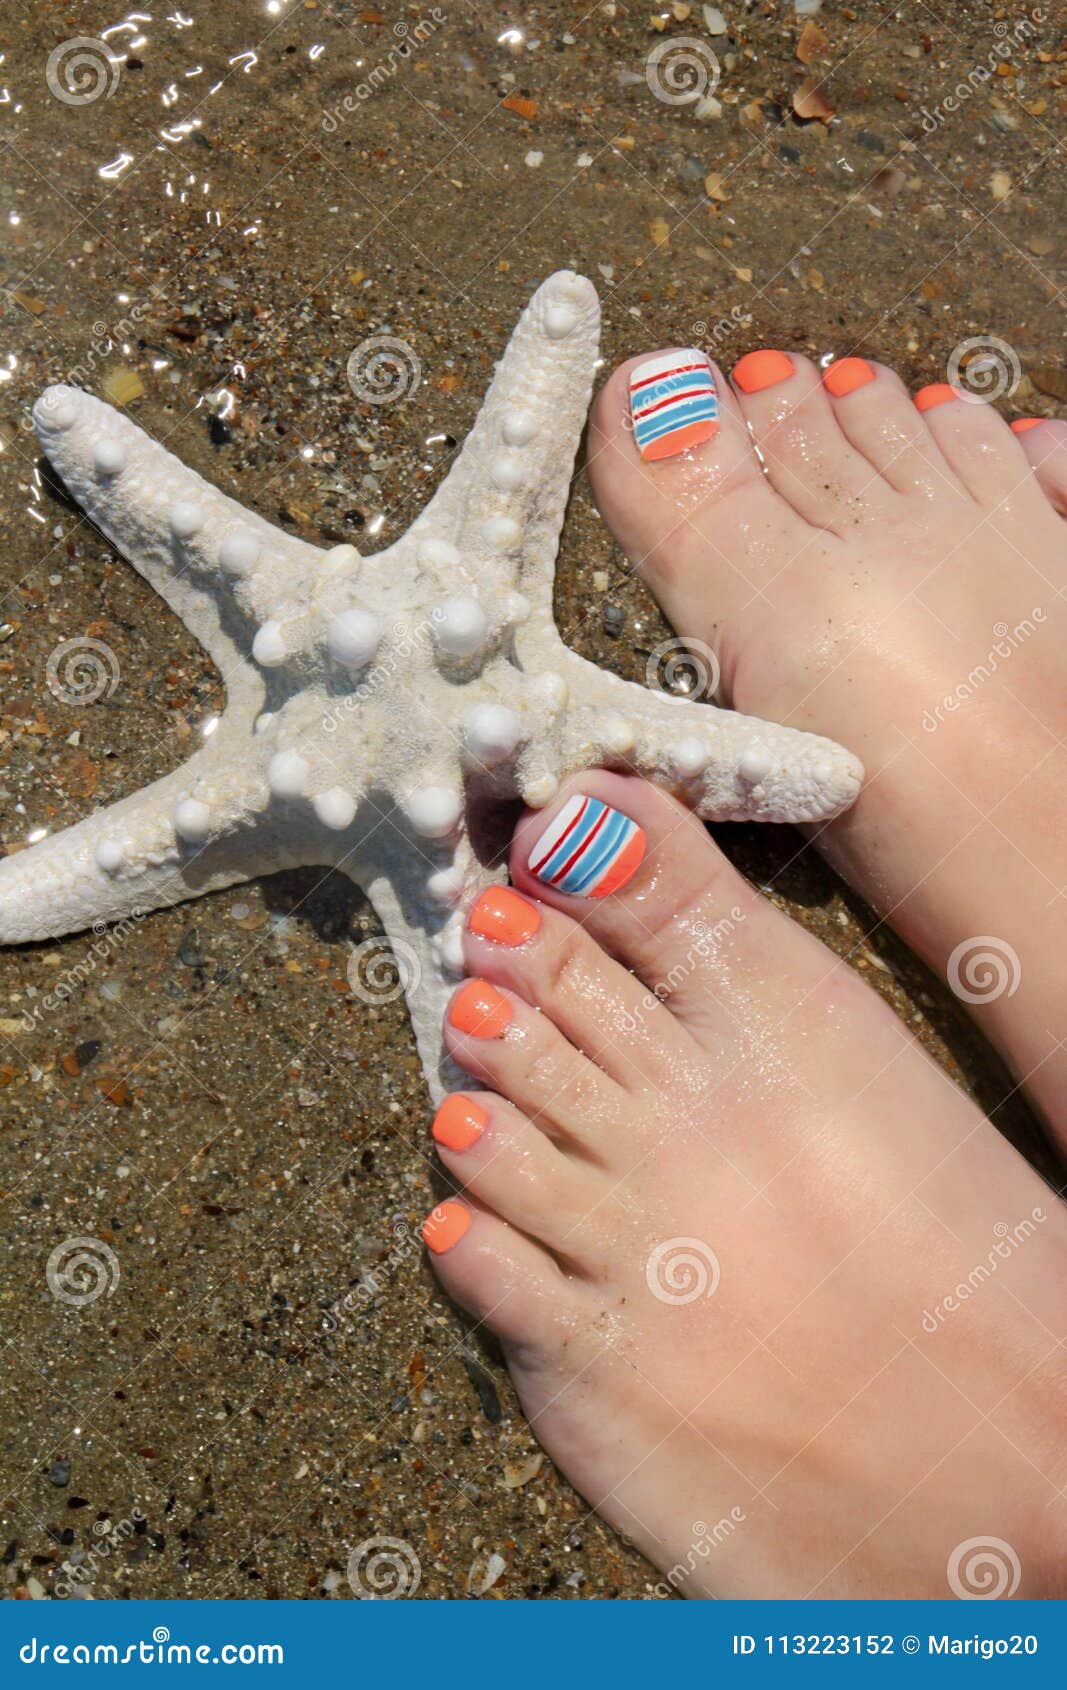 marine nail design marine nail design pedicure orange blue nail polish woman s leg close up starfish background 113223152